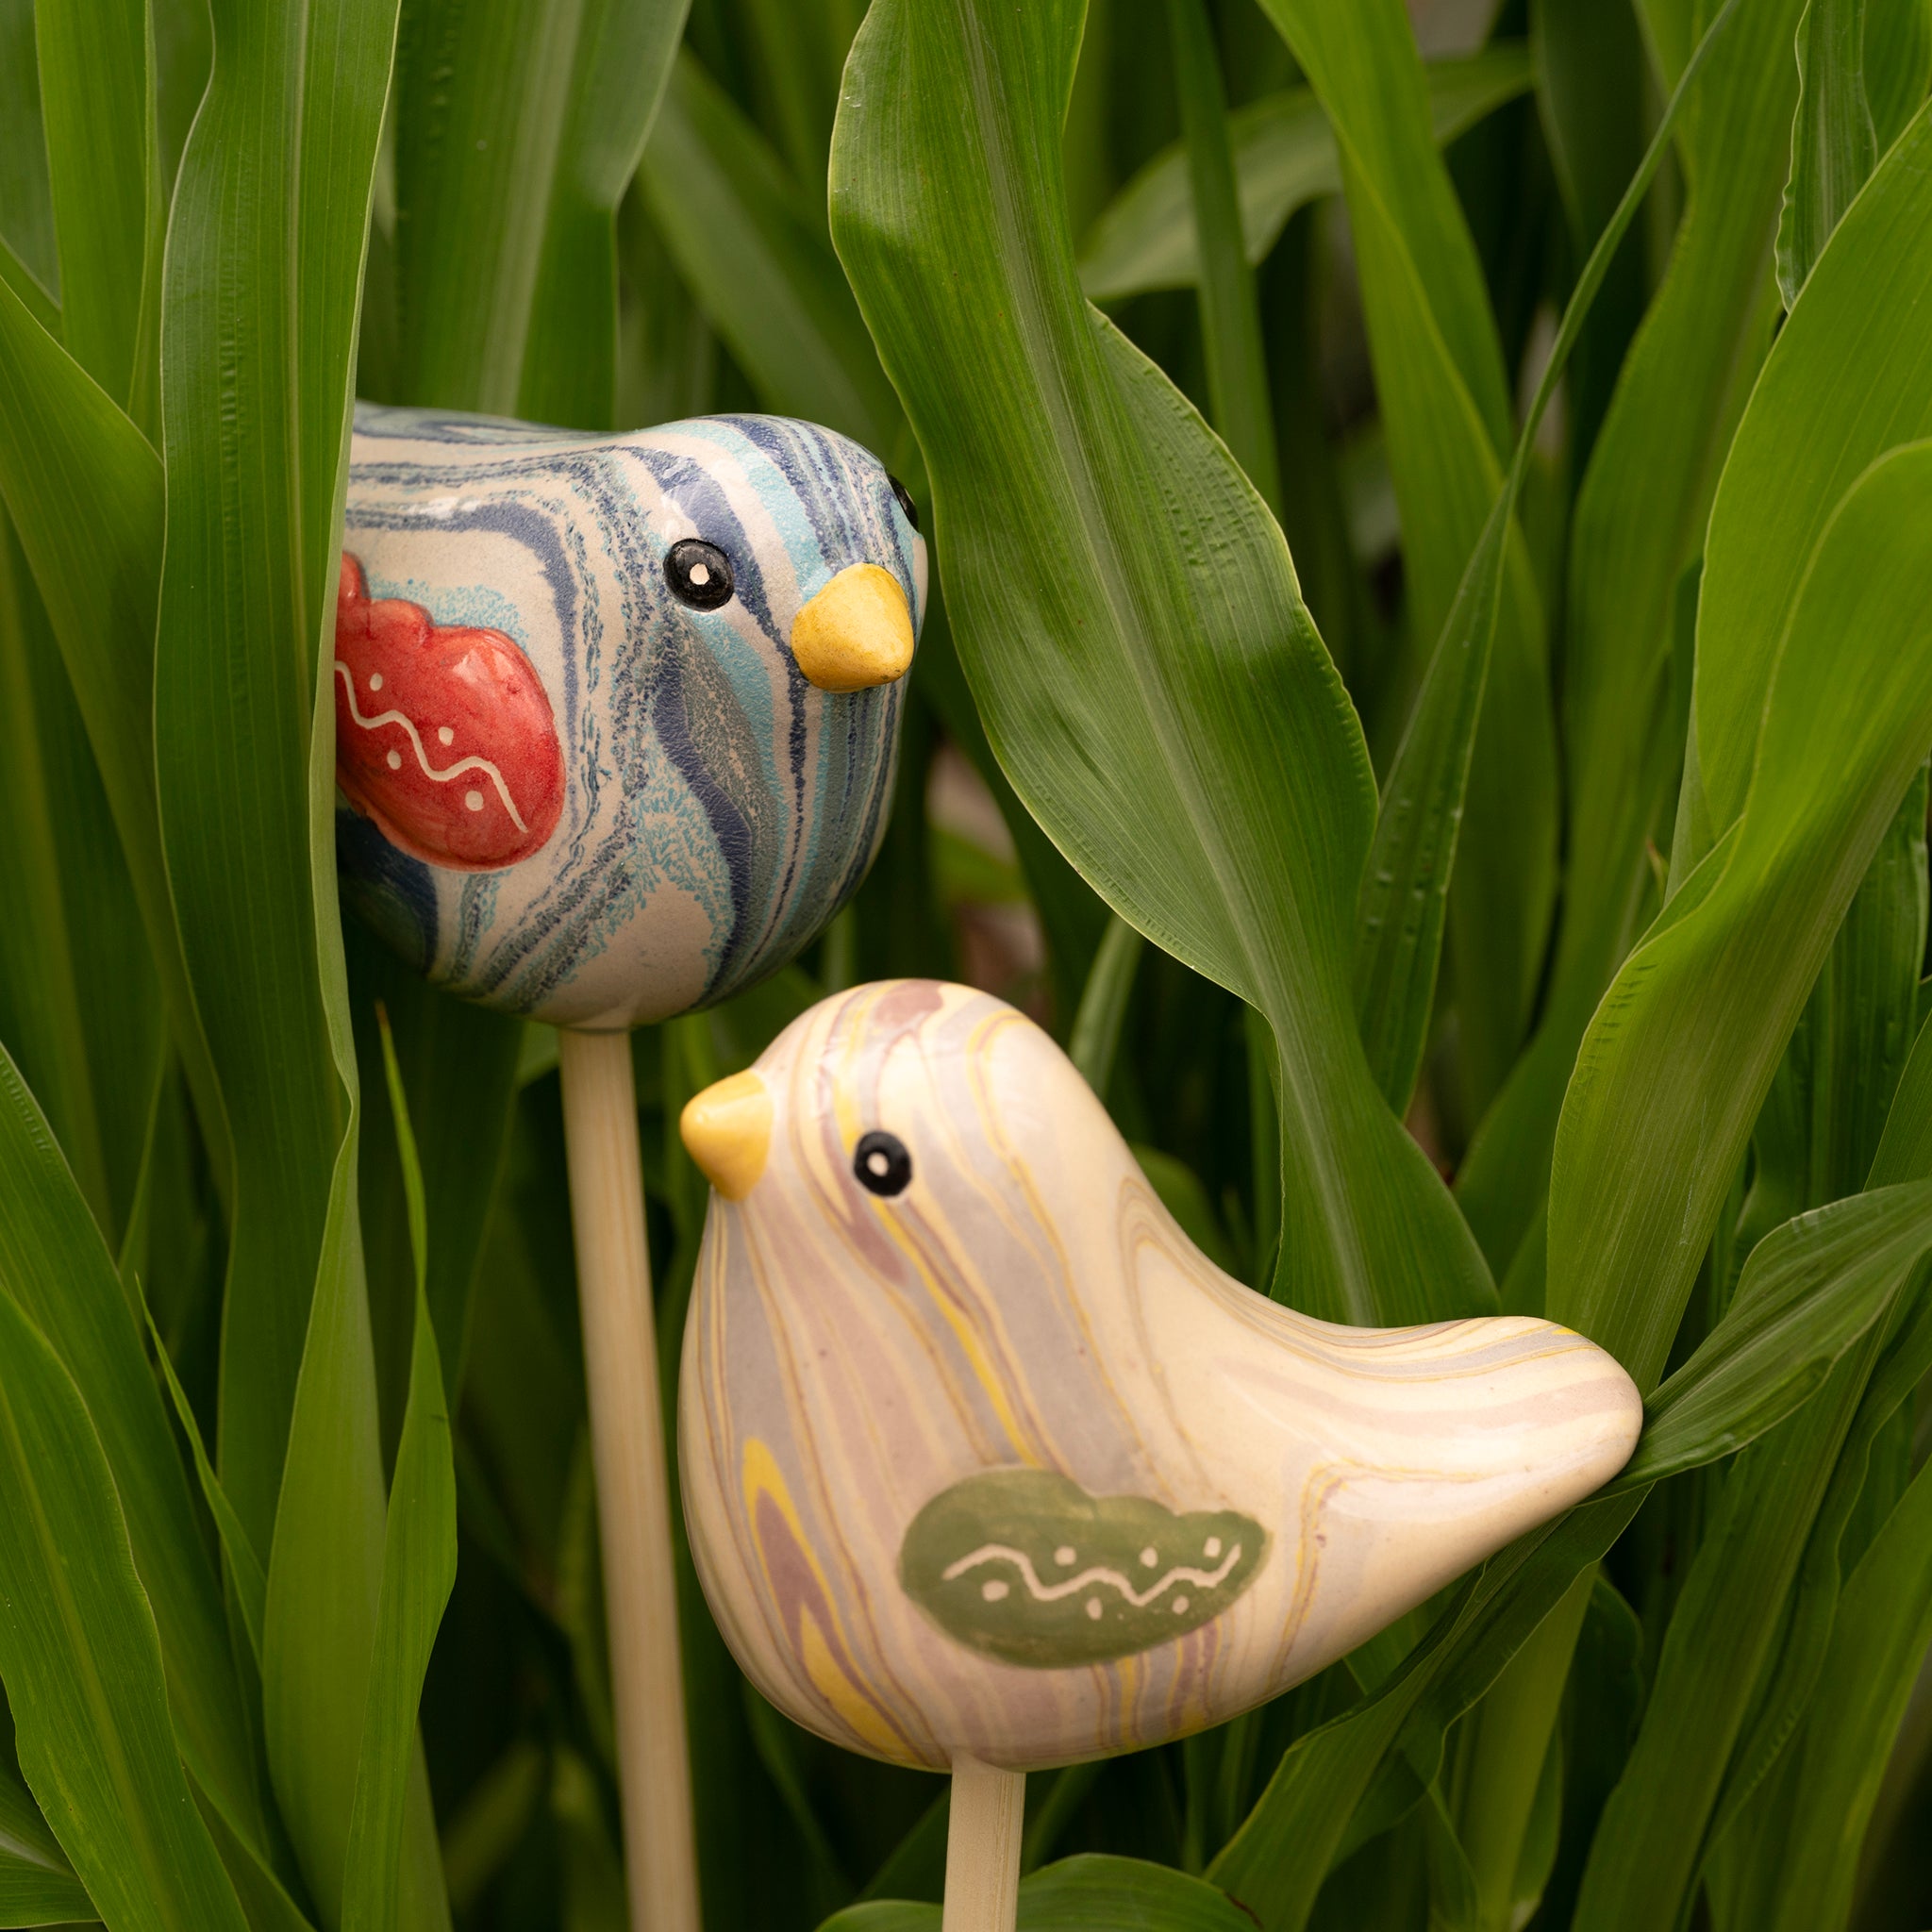 Bird - Swirled Ceramic Plant Stake (sold as 6's)